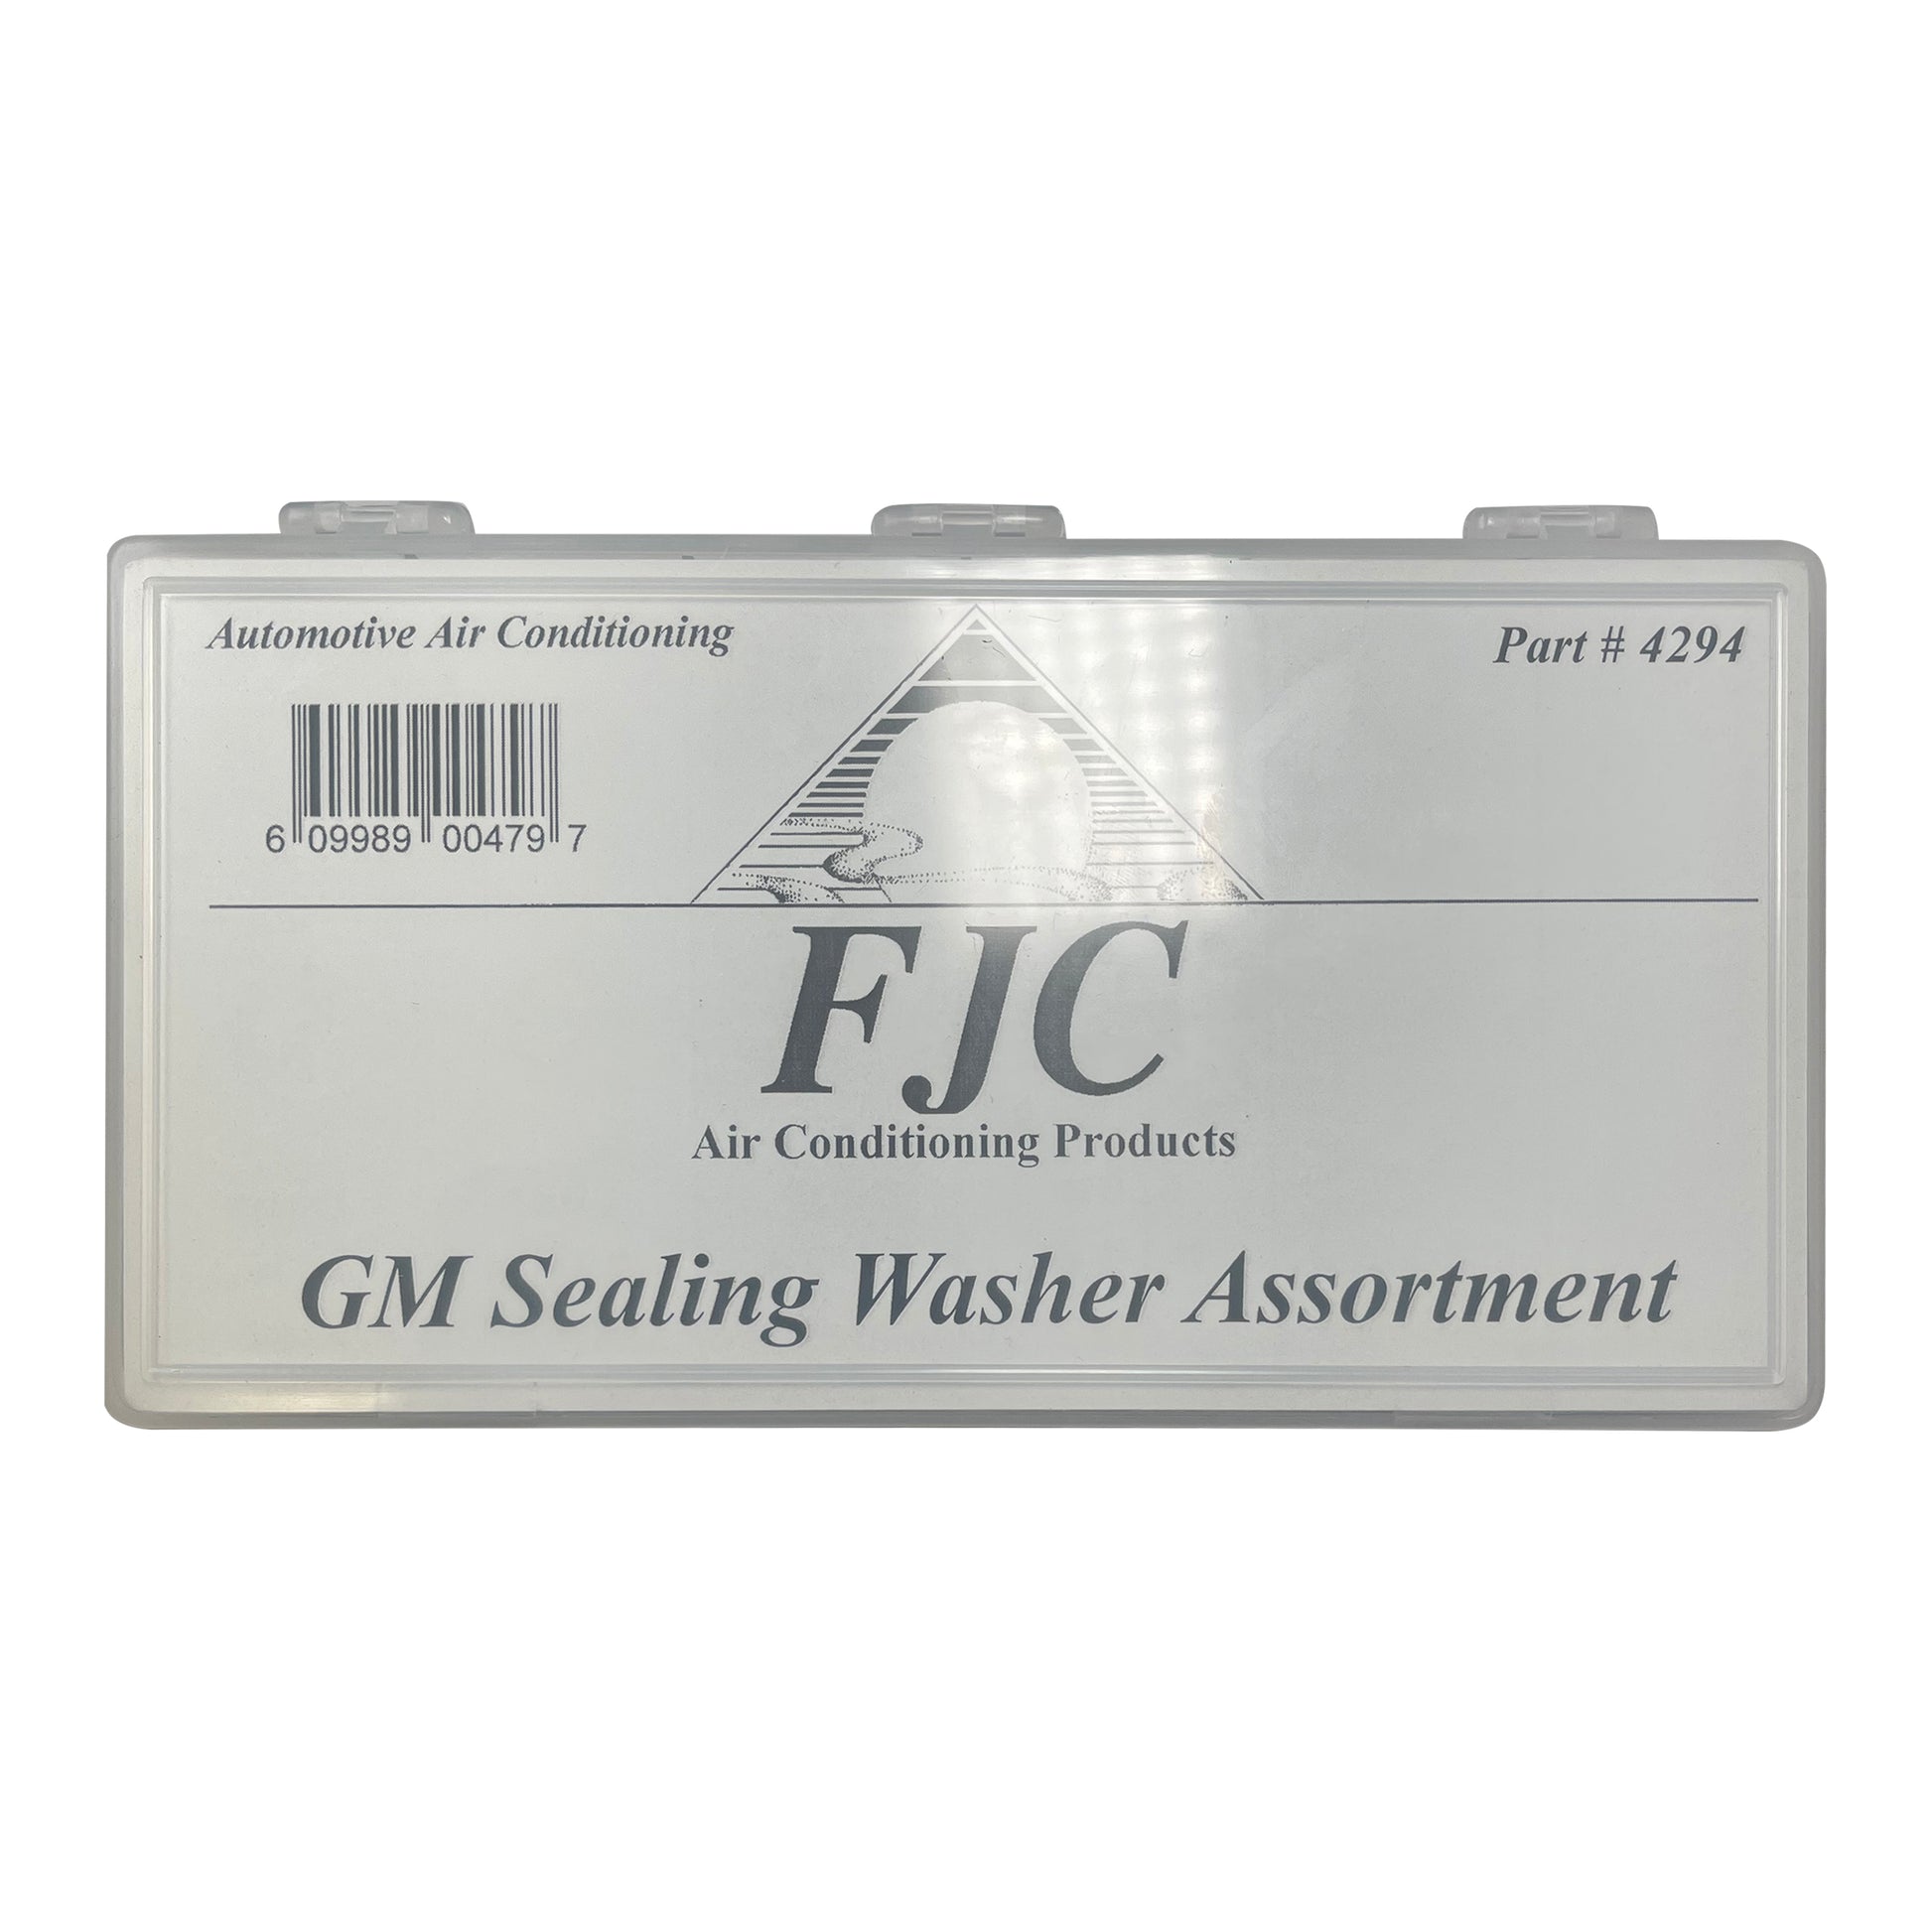 24 Piece GM Sealing Washer Assortment